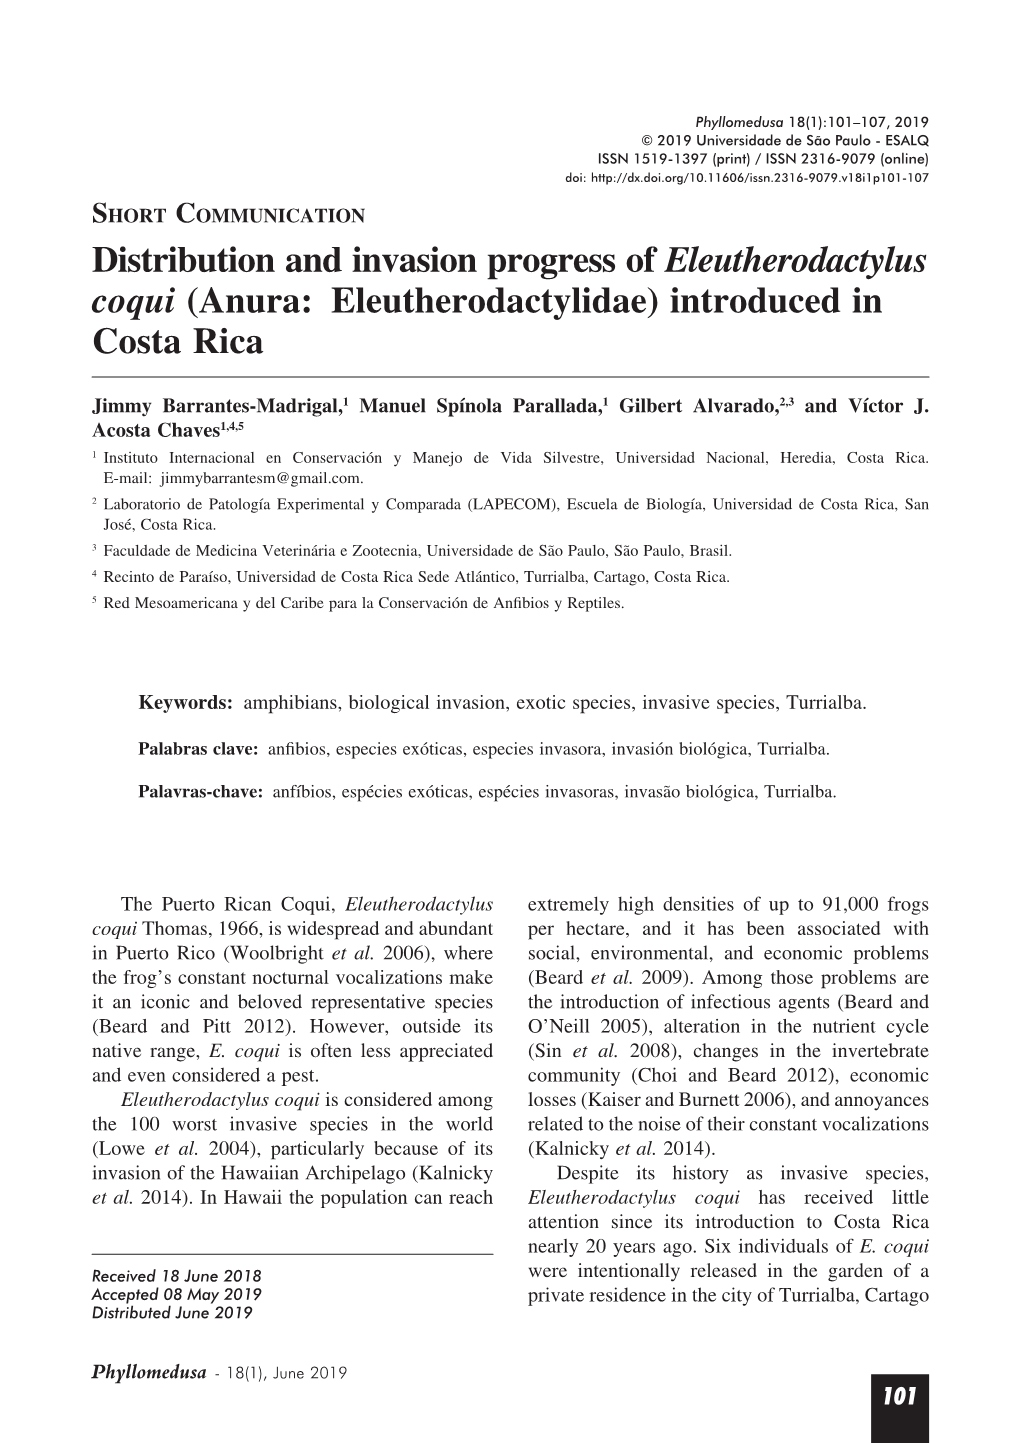 Distribution and Invasion Progress of Eleutherodactylus Coqui (Anura: Eleutherodactylidae) Introduced in Costa Rica